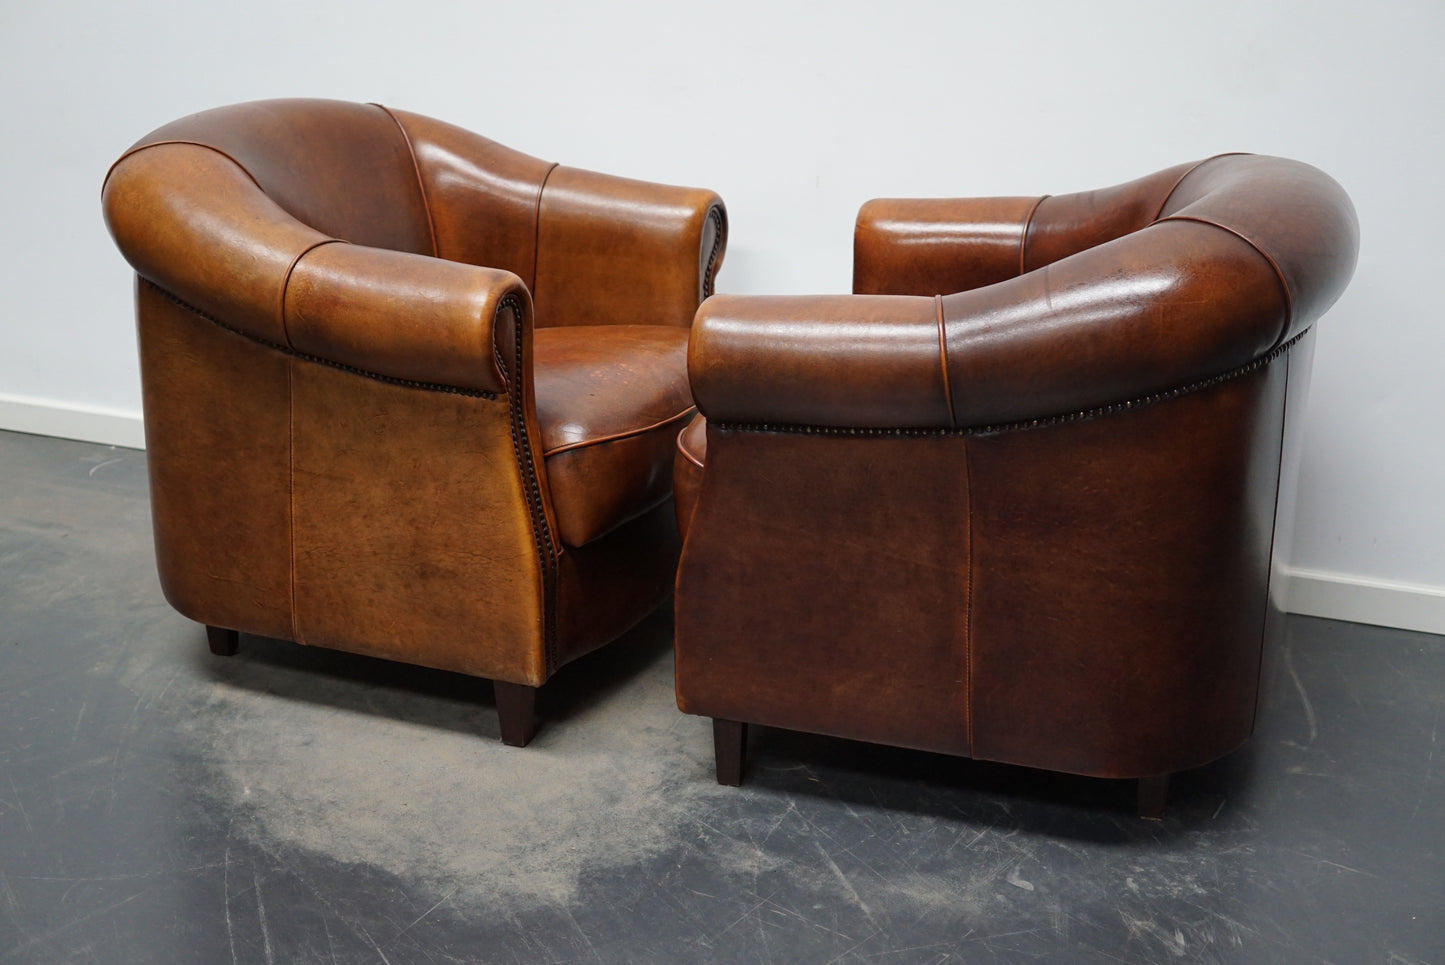 Vintage Dutch Cognac Leather Club Chairs, Set of 2